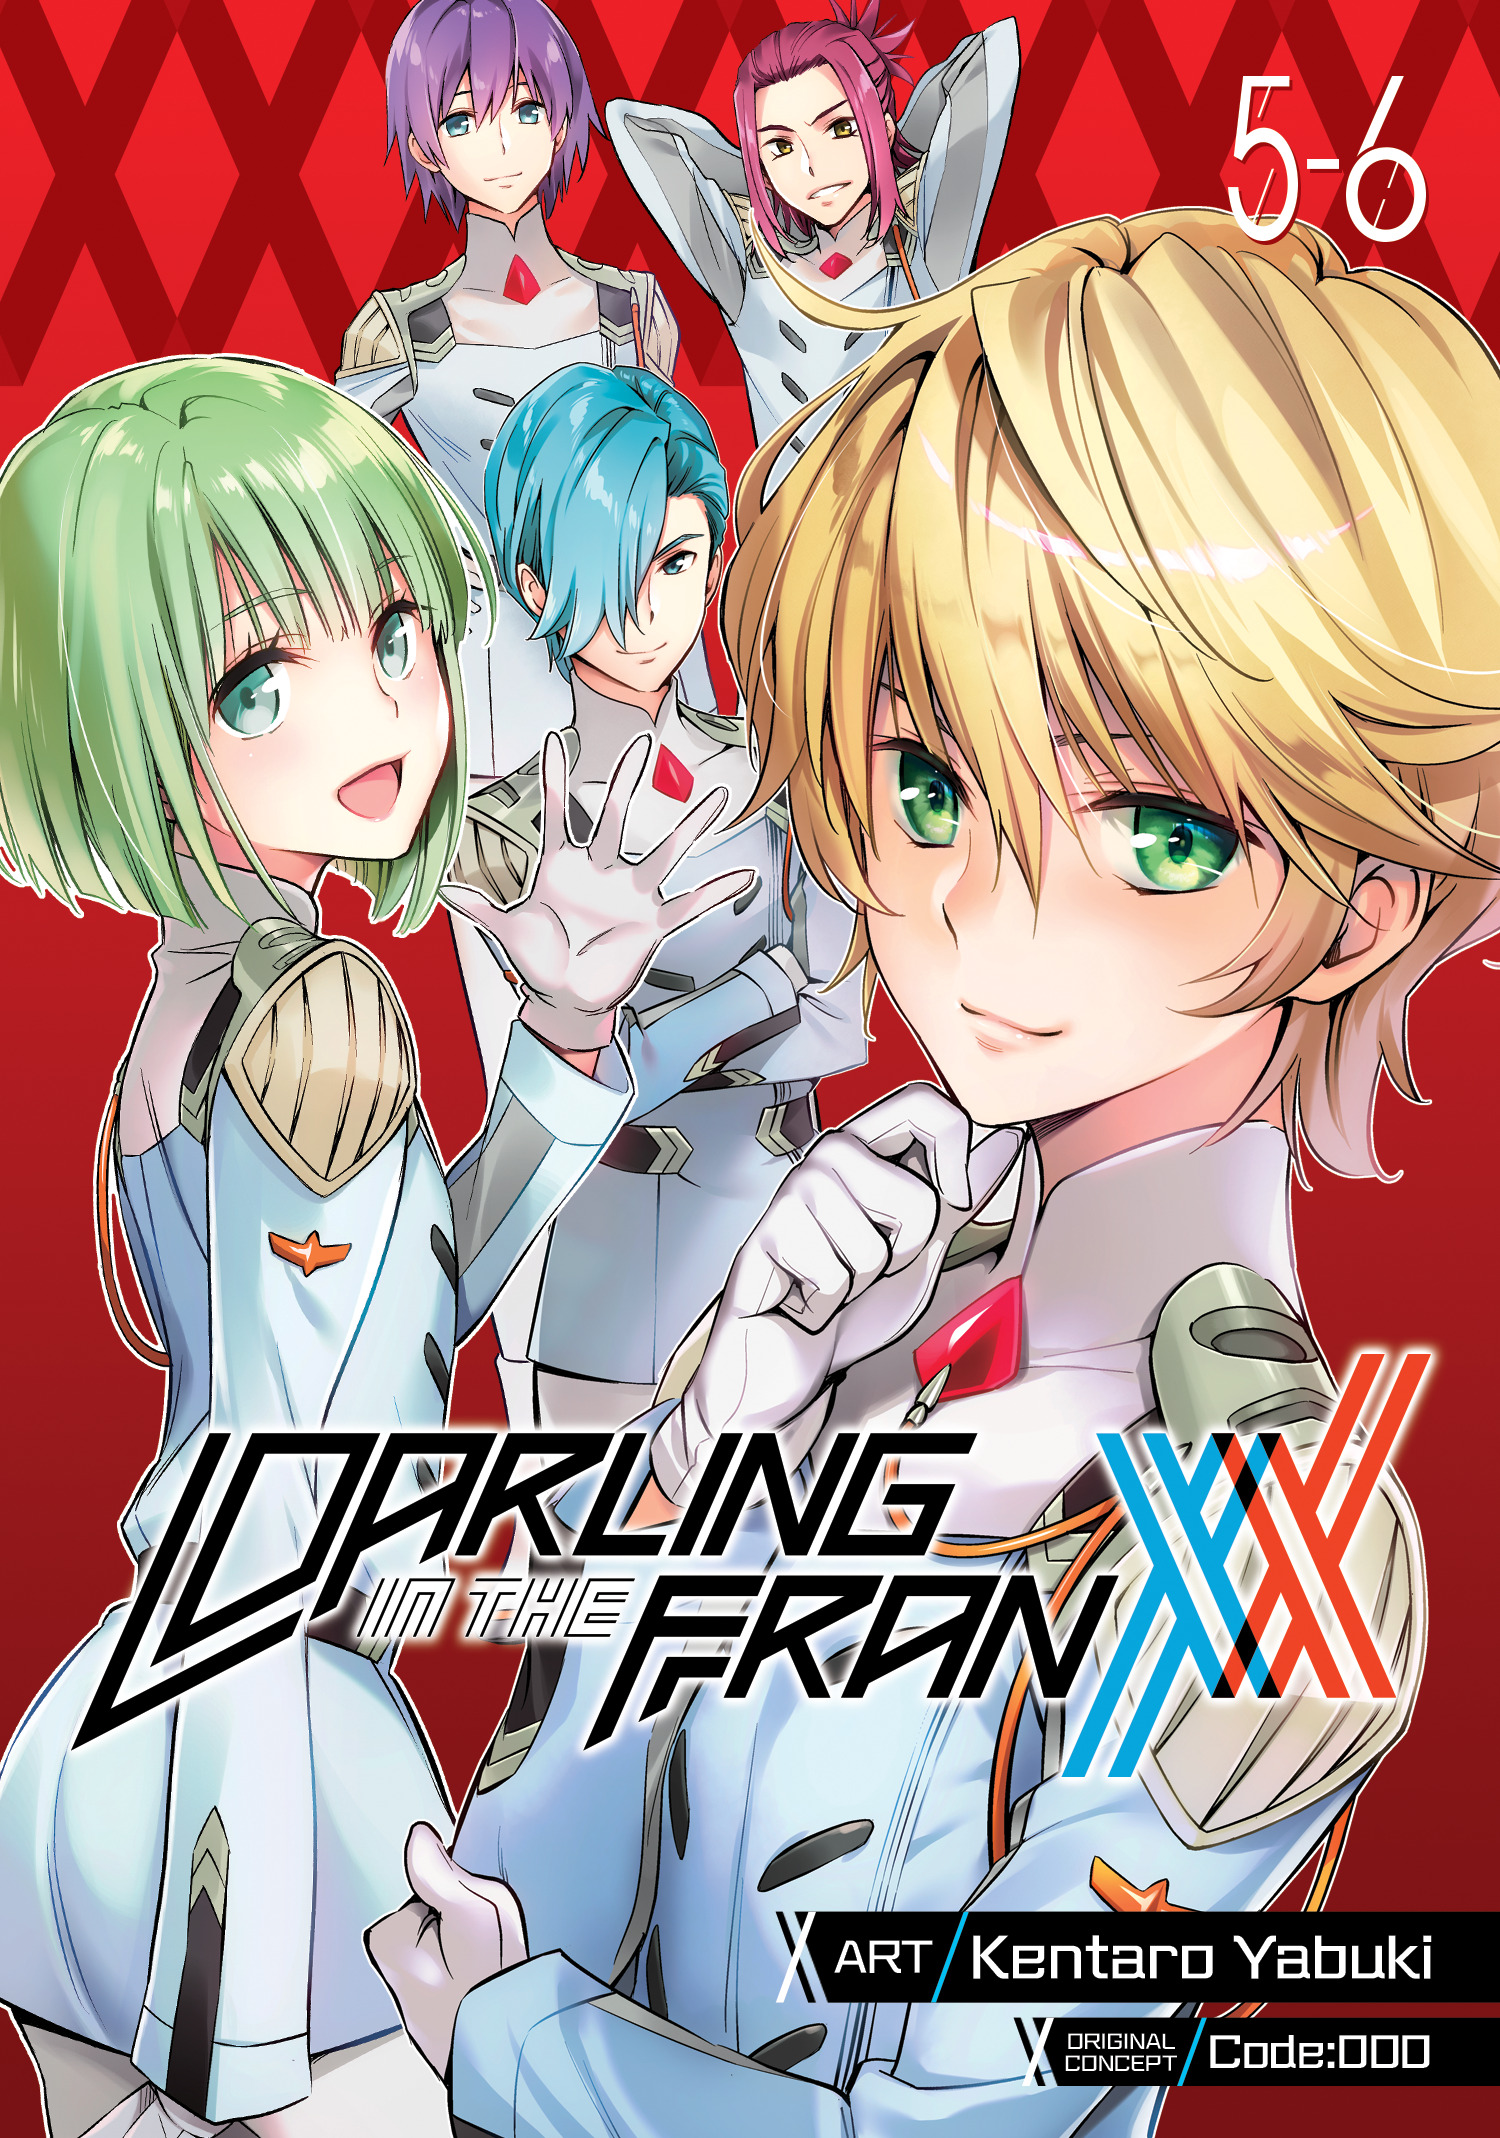 DARLING in the FRANXX Vol. 5-6 | Code:000